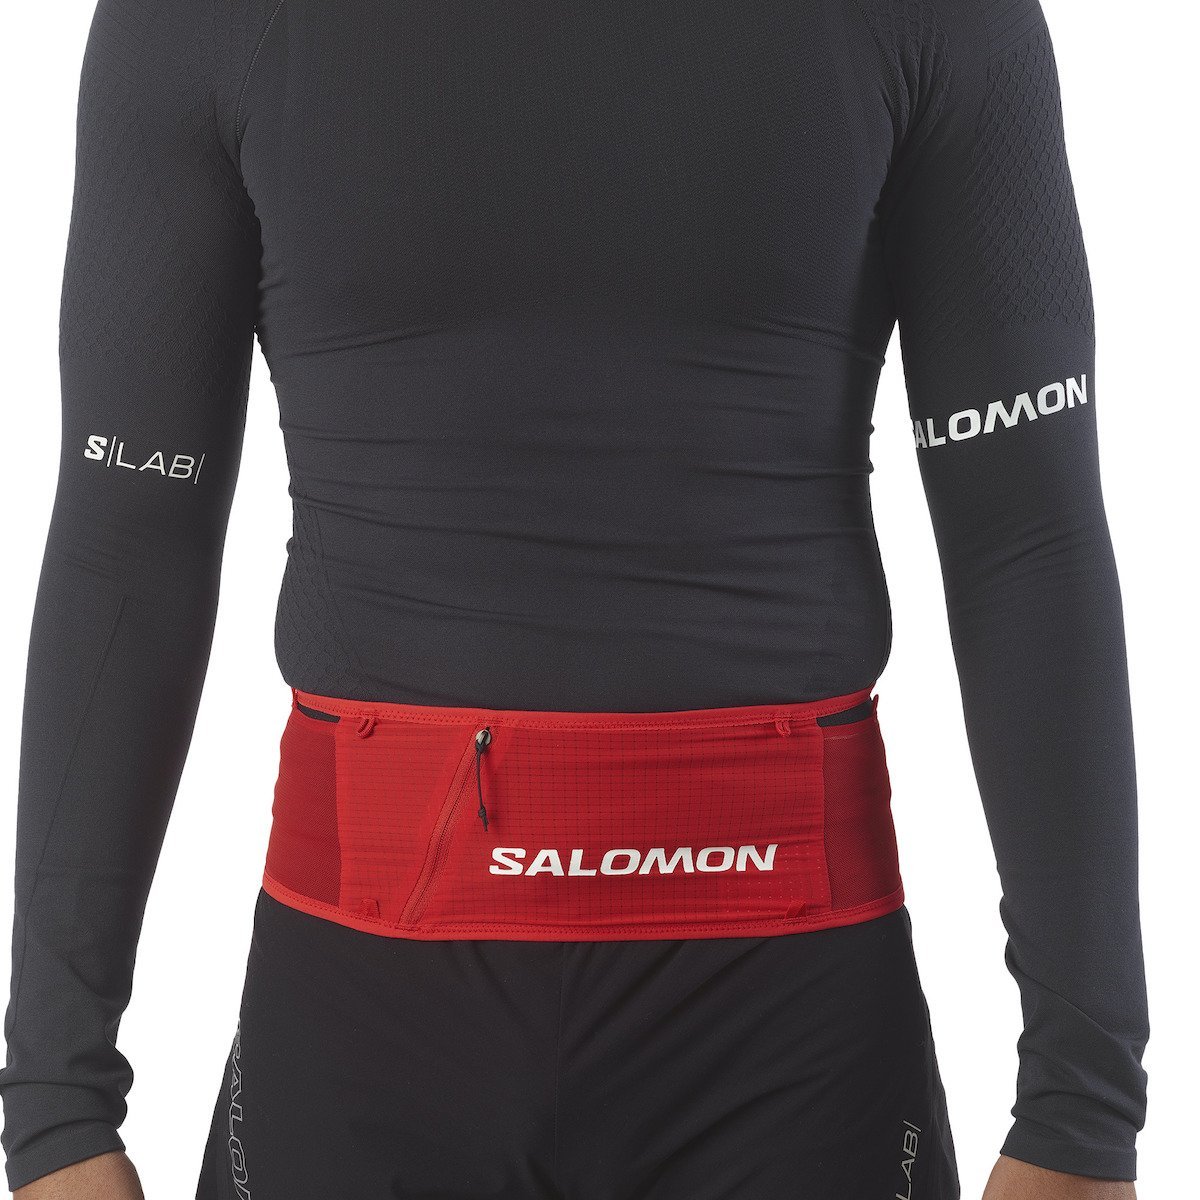 Opasok Salomon S LAB Belt - červená/čierna